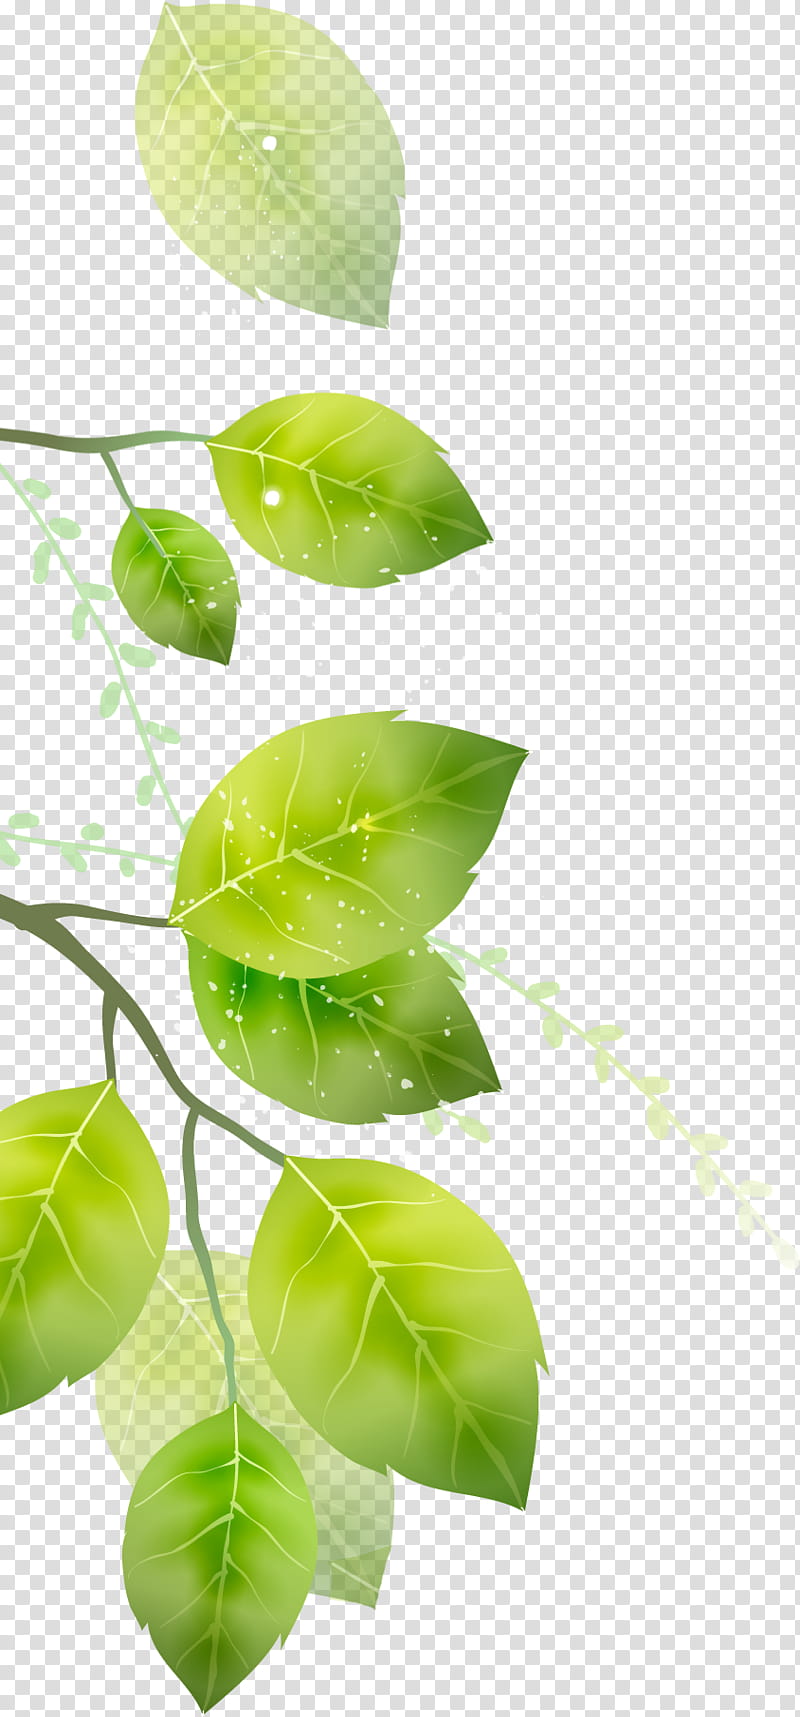 Green Leaf, Blog, South Korea, Plant Stem, Naver, Daum, Travel, Goal transparent background PNG clipart